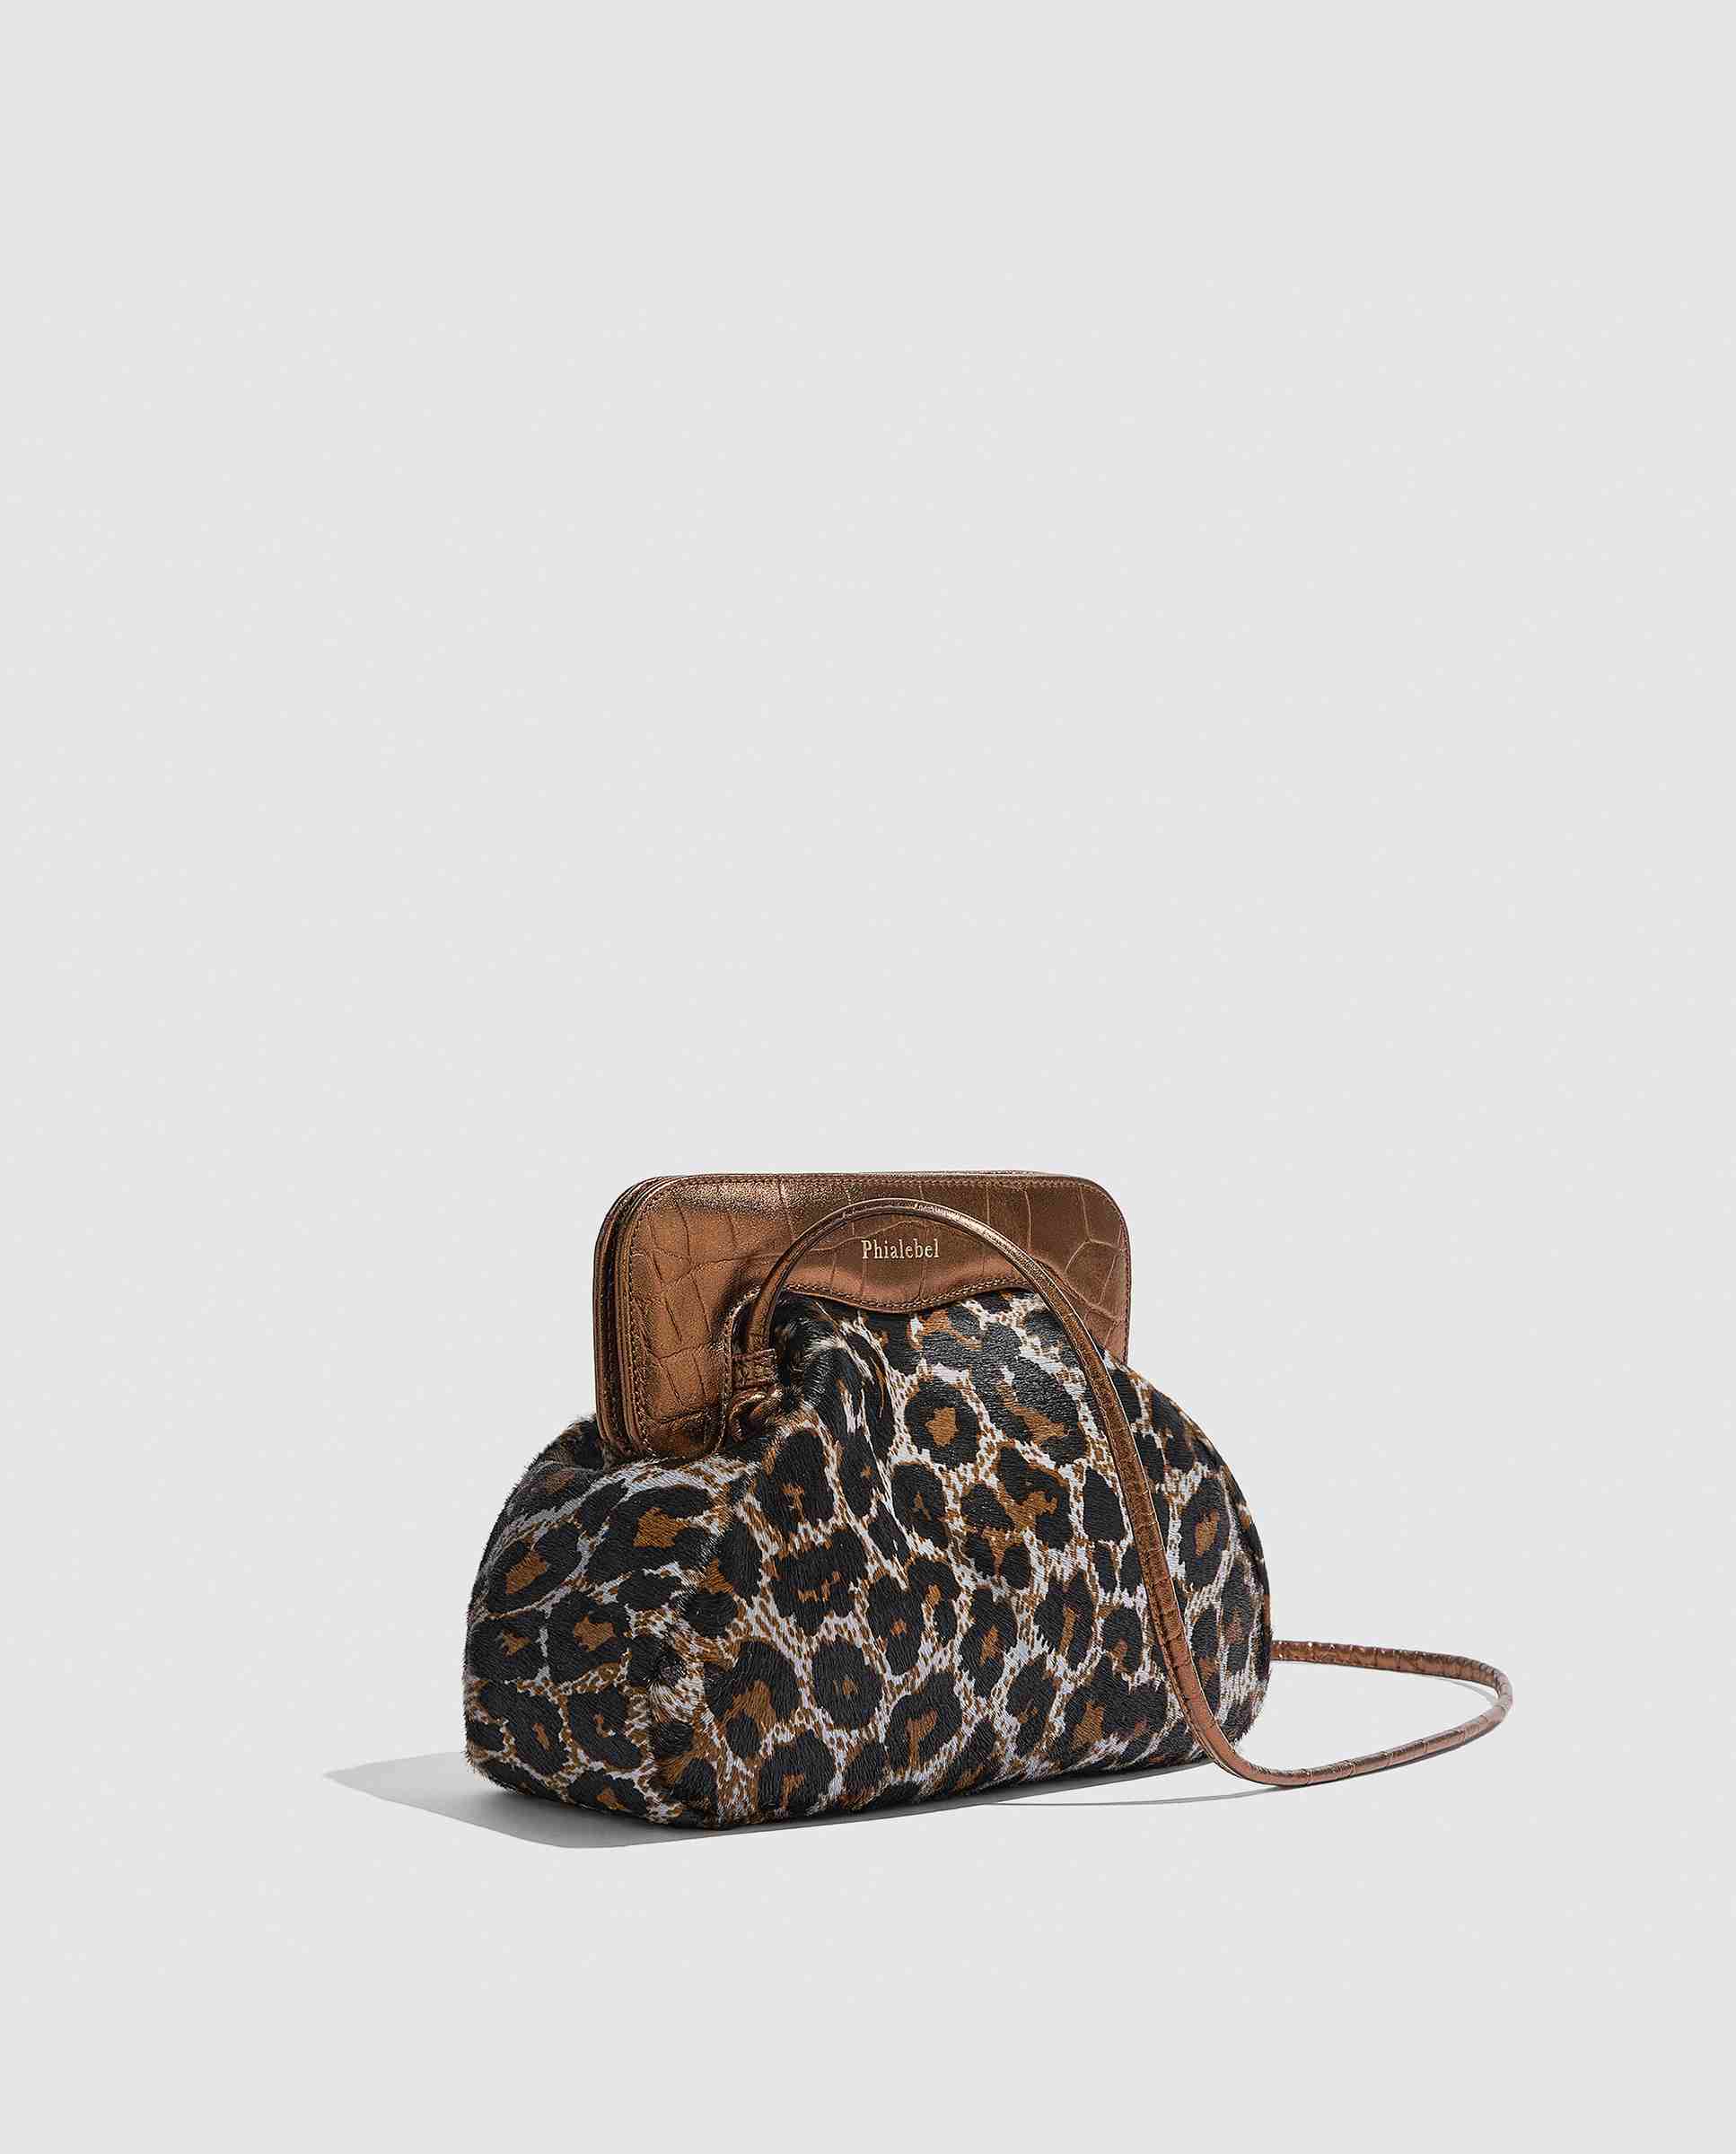 Un bolso de leopardo gris visto de perfil